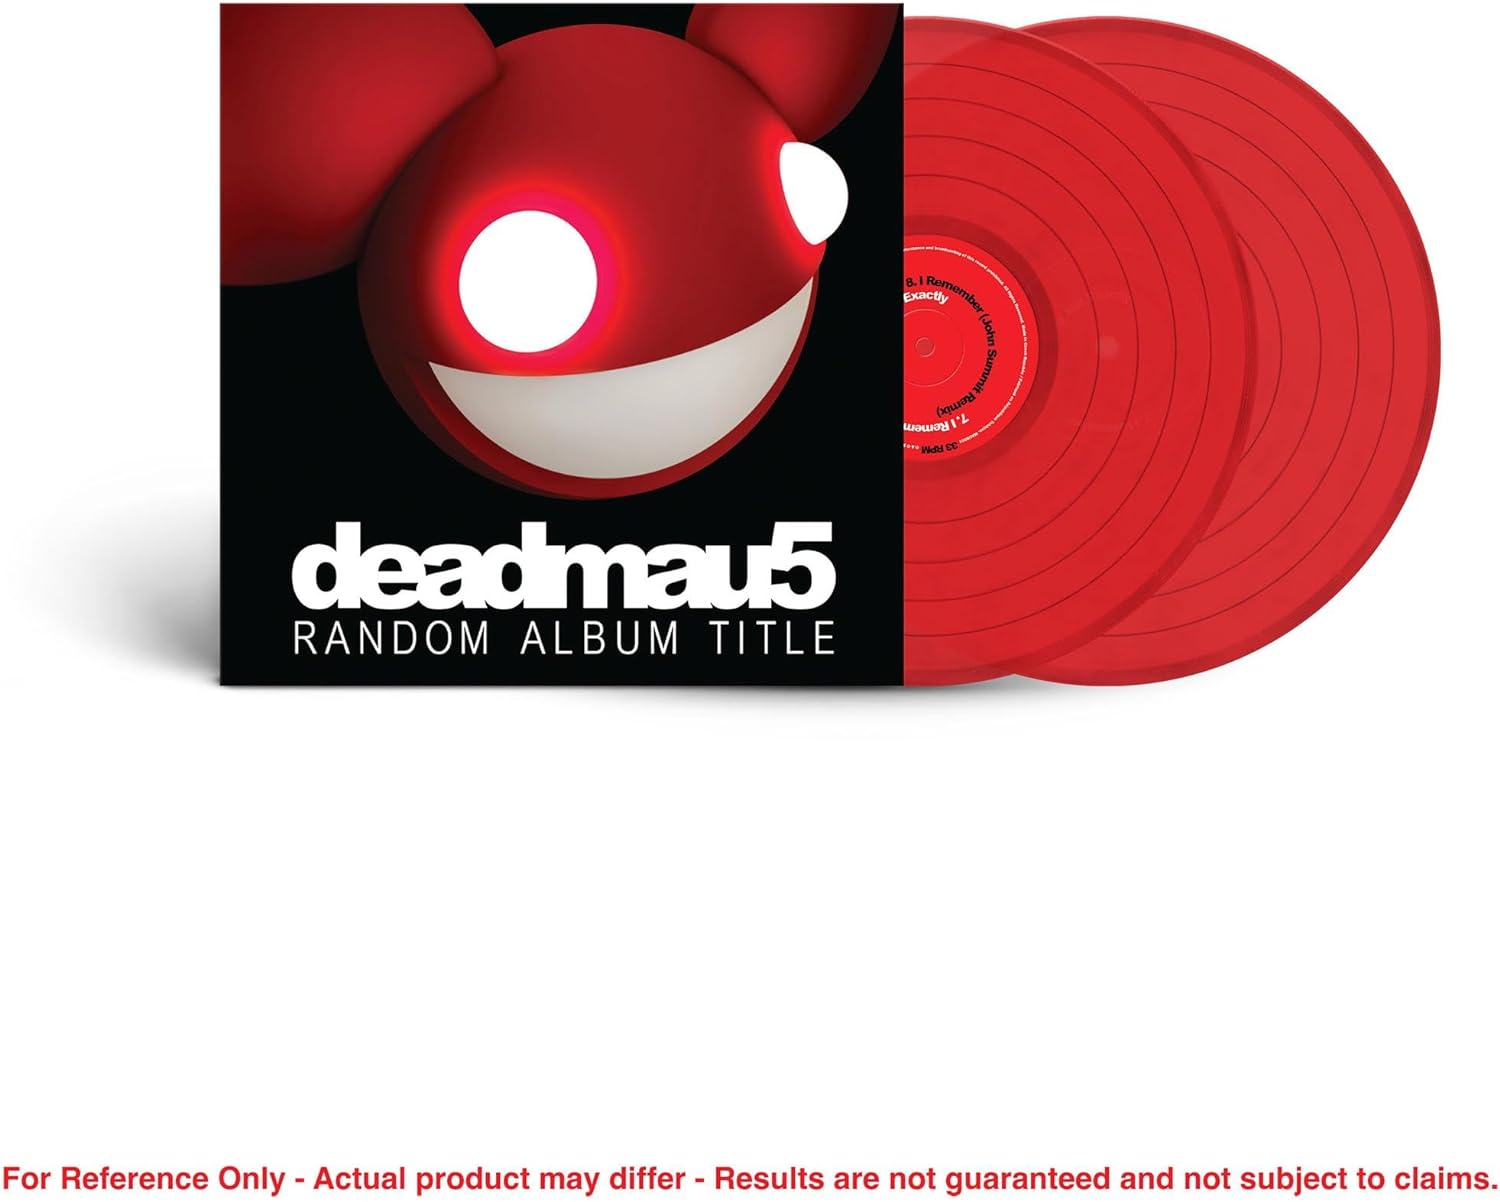 deadmau5 "Random Album Title" 2x12" Vinyl - PRE-ORDER